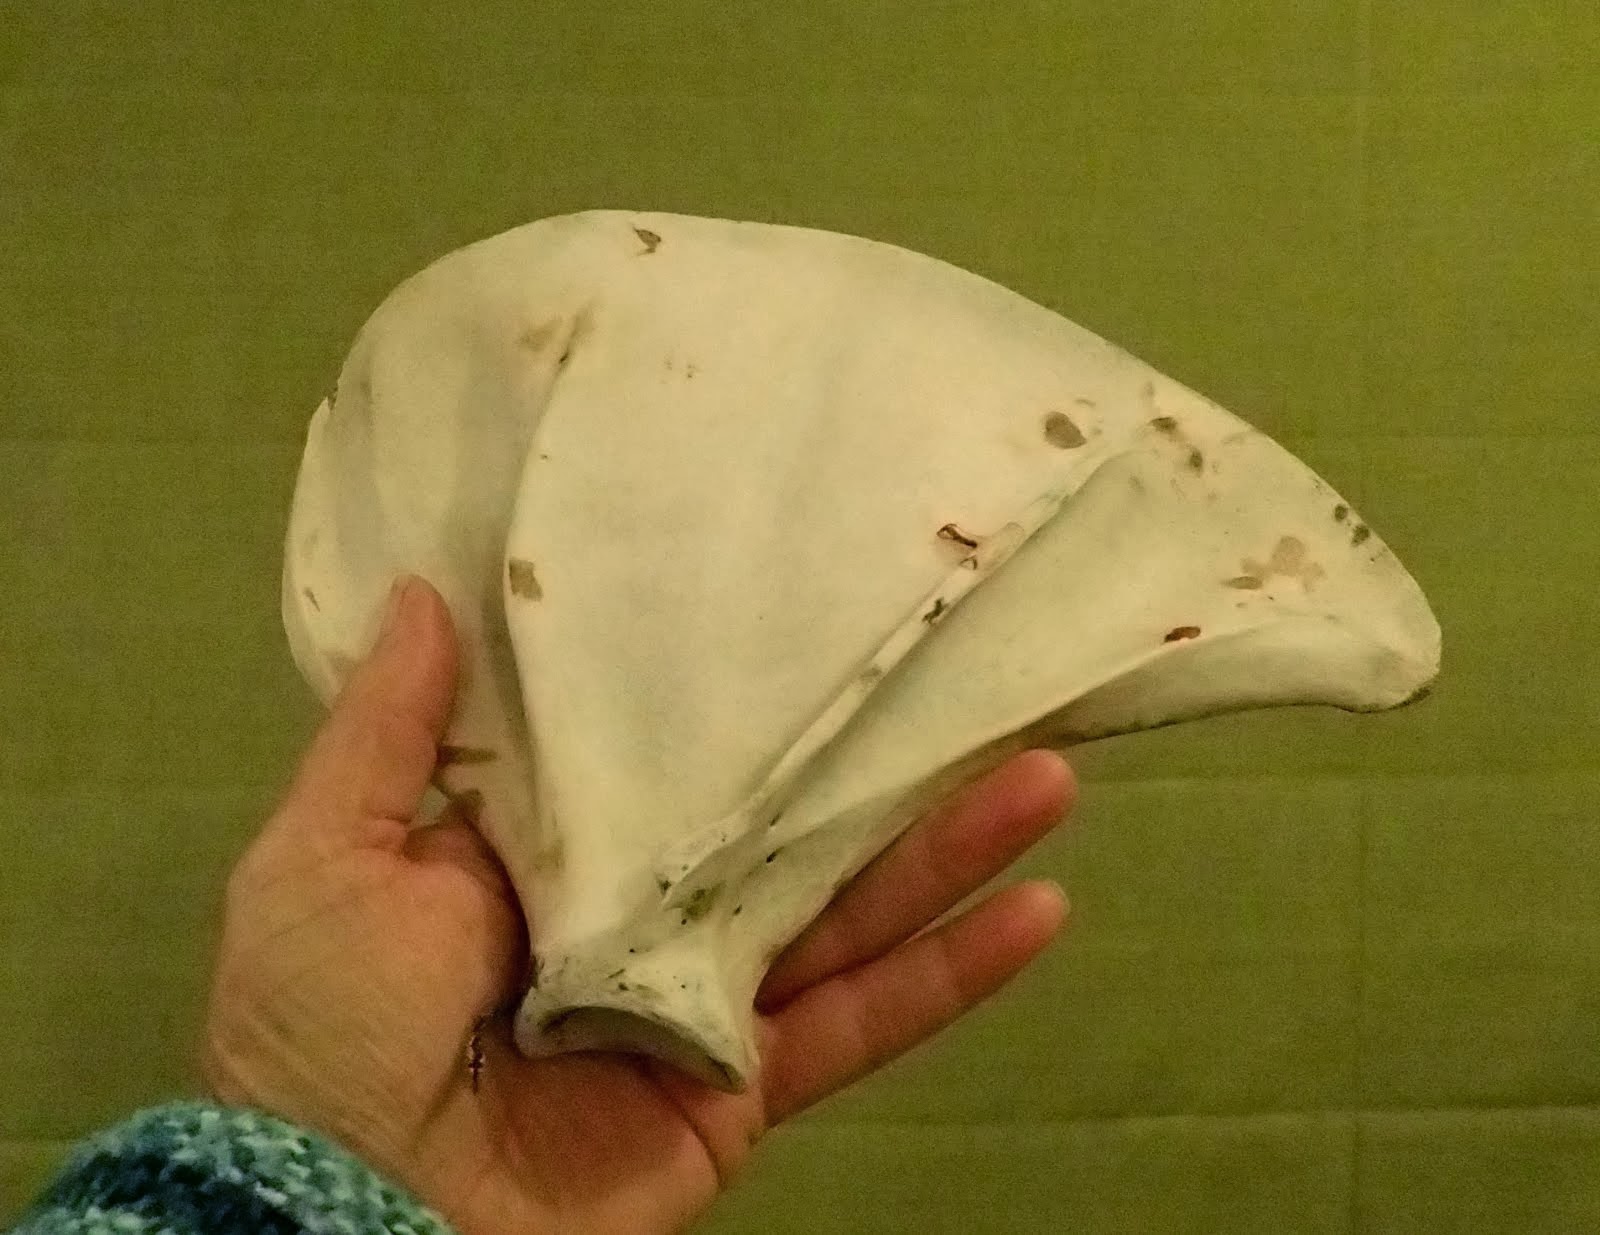 A fan shaped bone. Picked up on the beach, after last week's storm